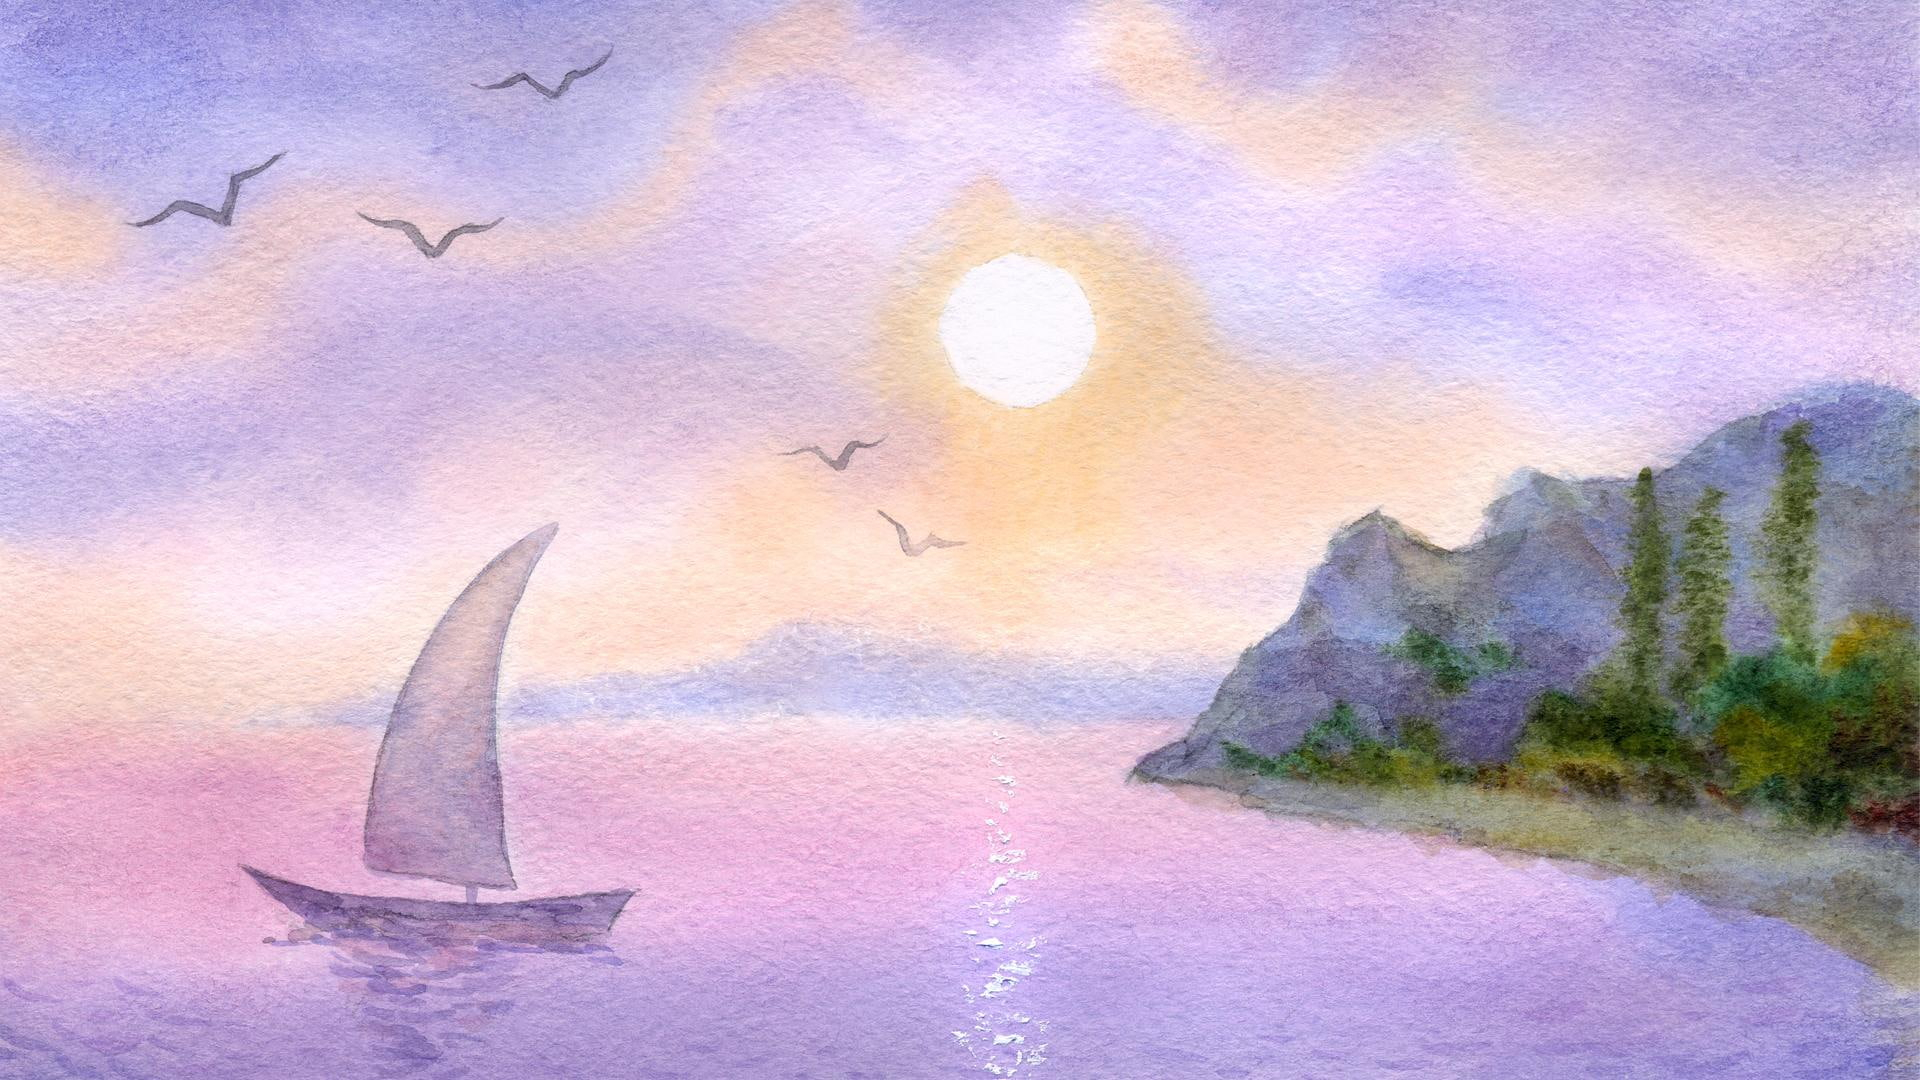 Watercolor Sail wallpaper, island, sail boat, lavender, pink, sunset, trees